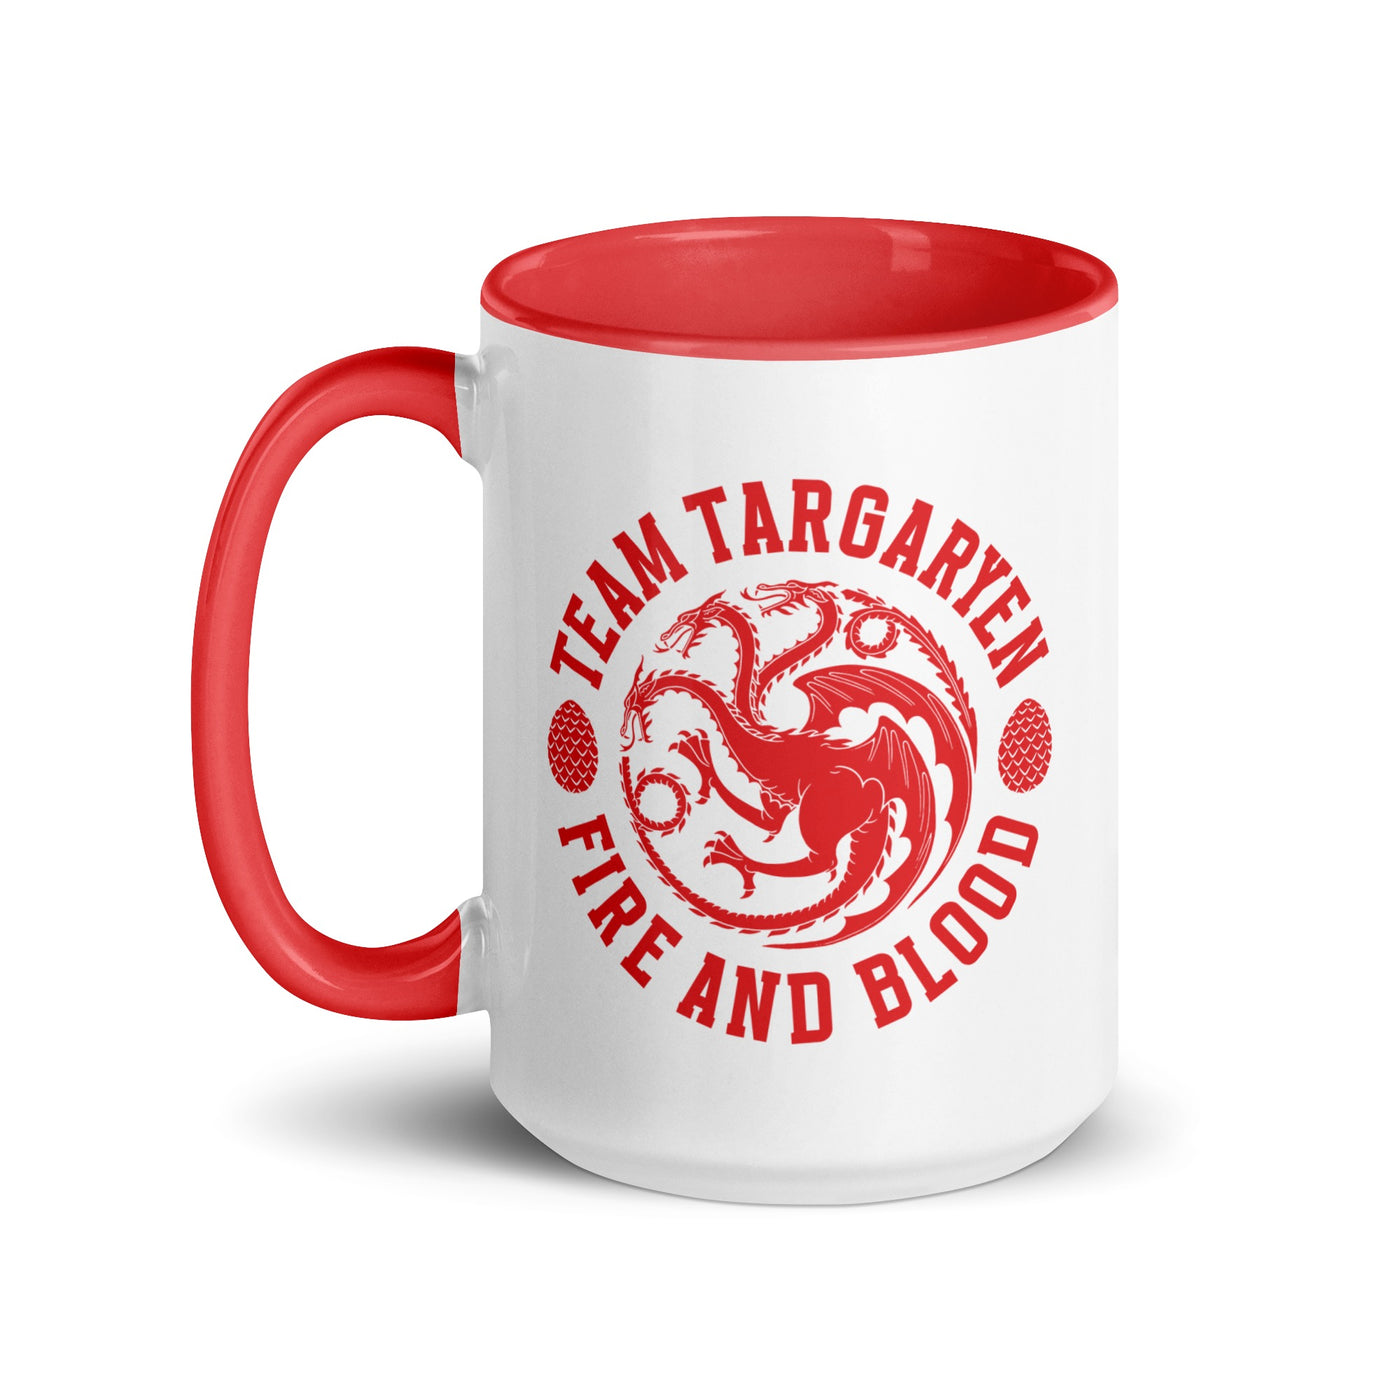 House of the Dragon Team Targaryen Mug